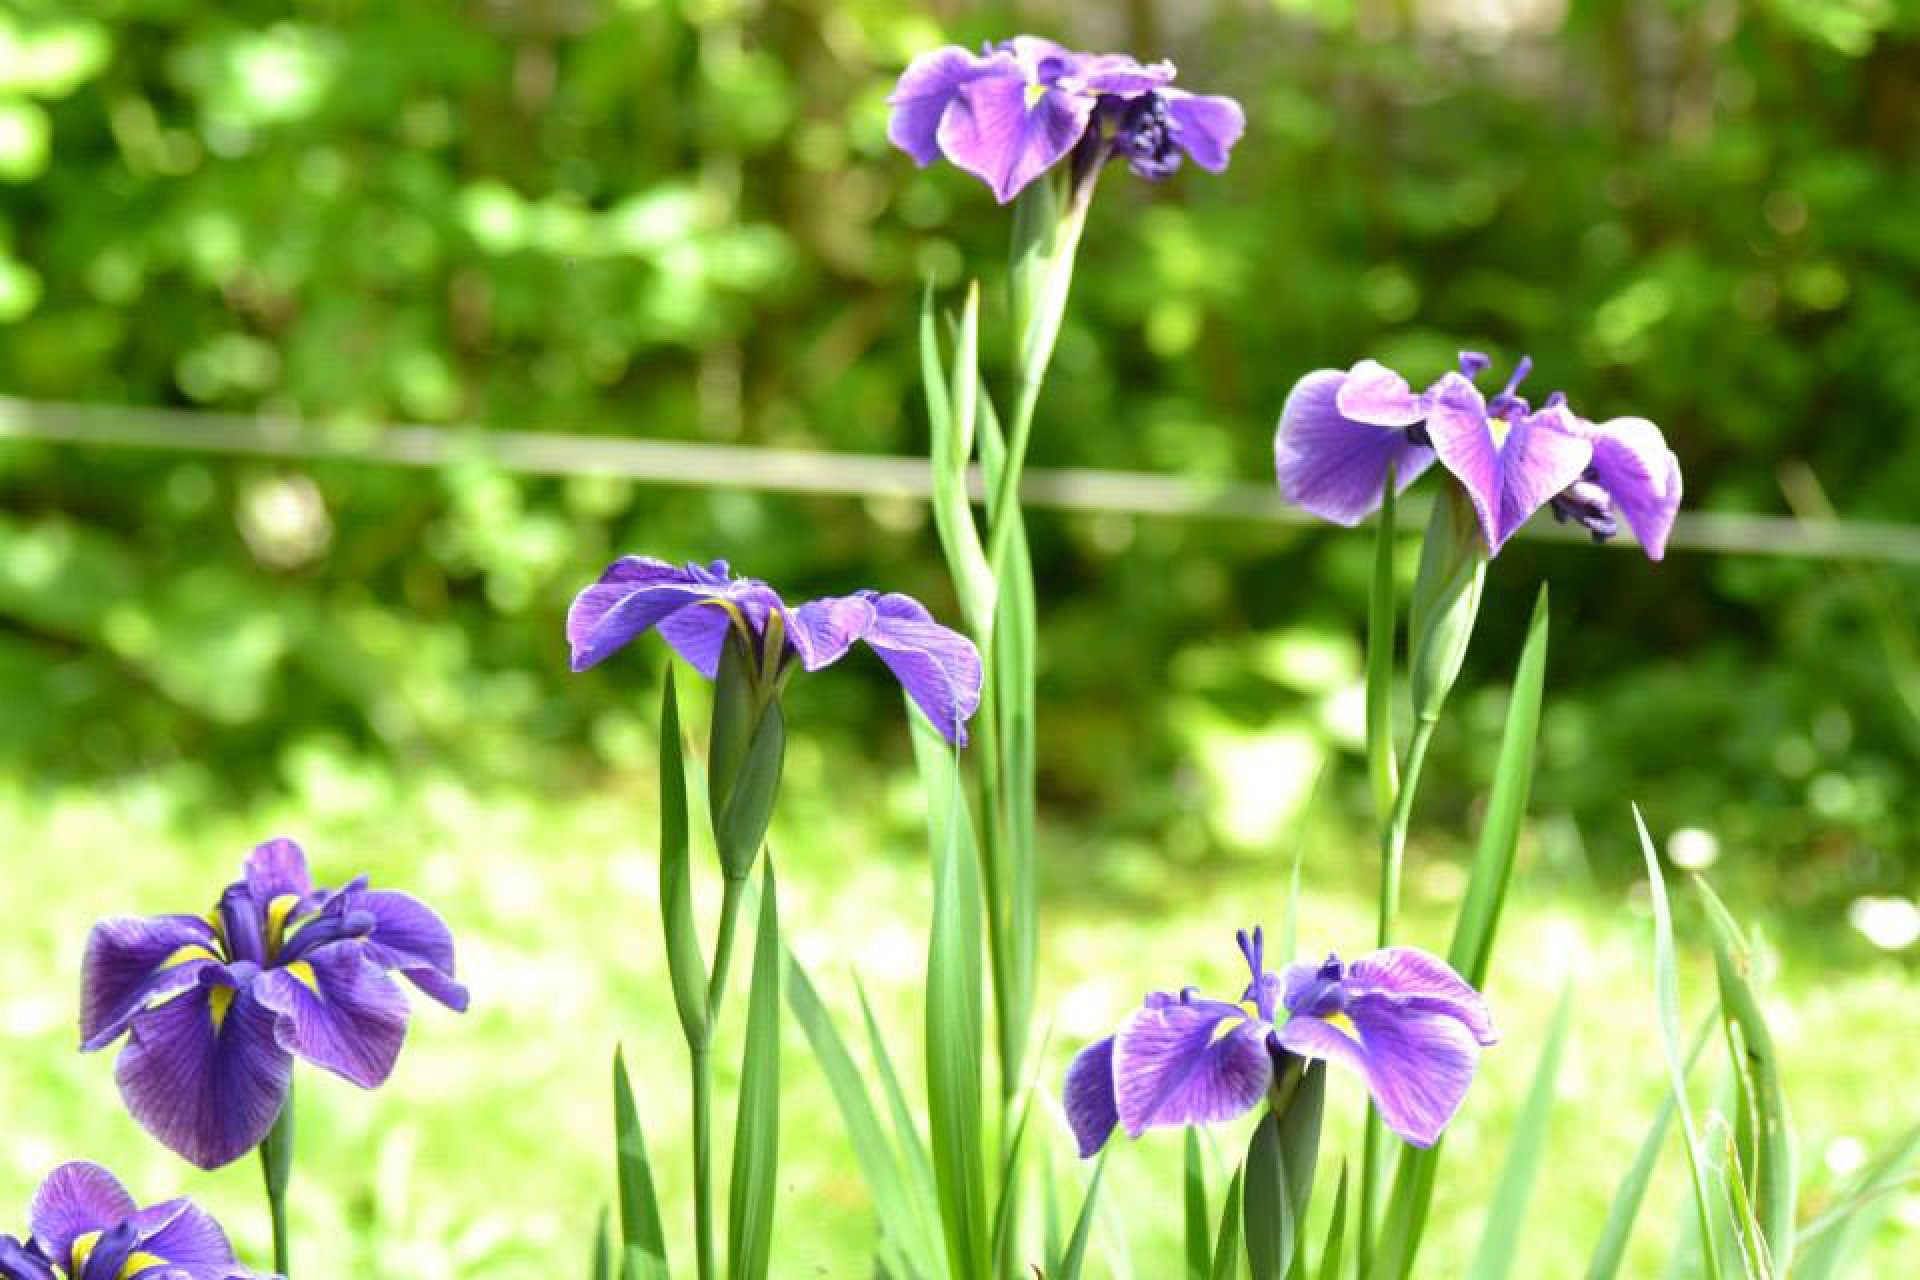 five-petaled purple flowers